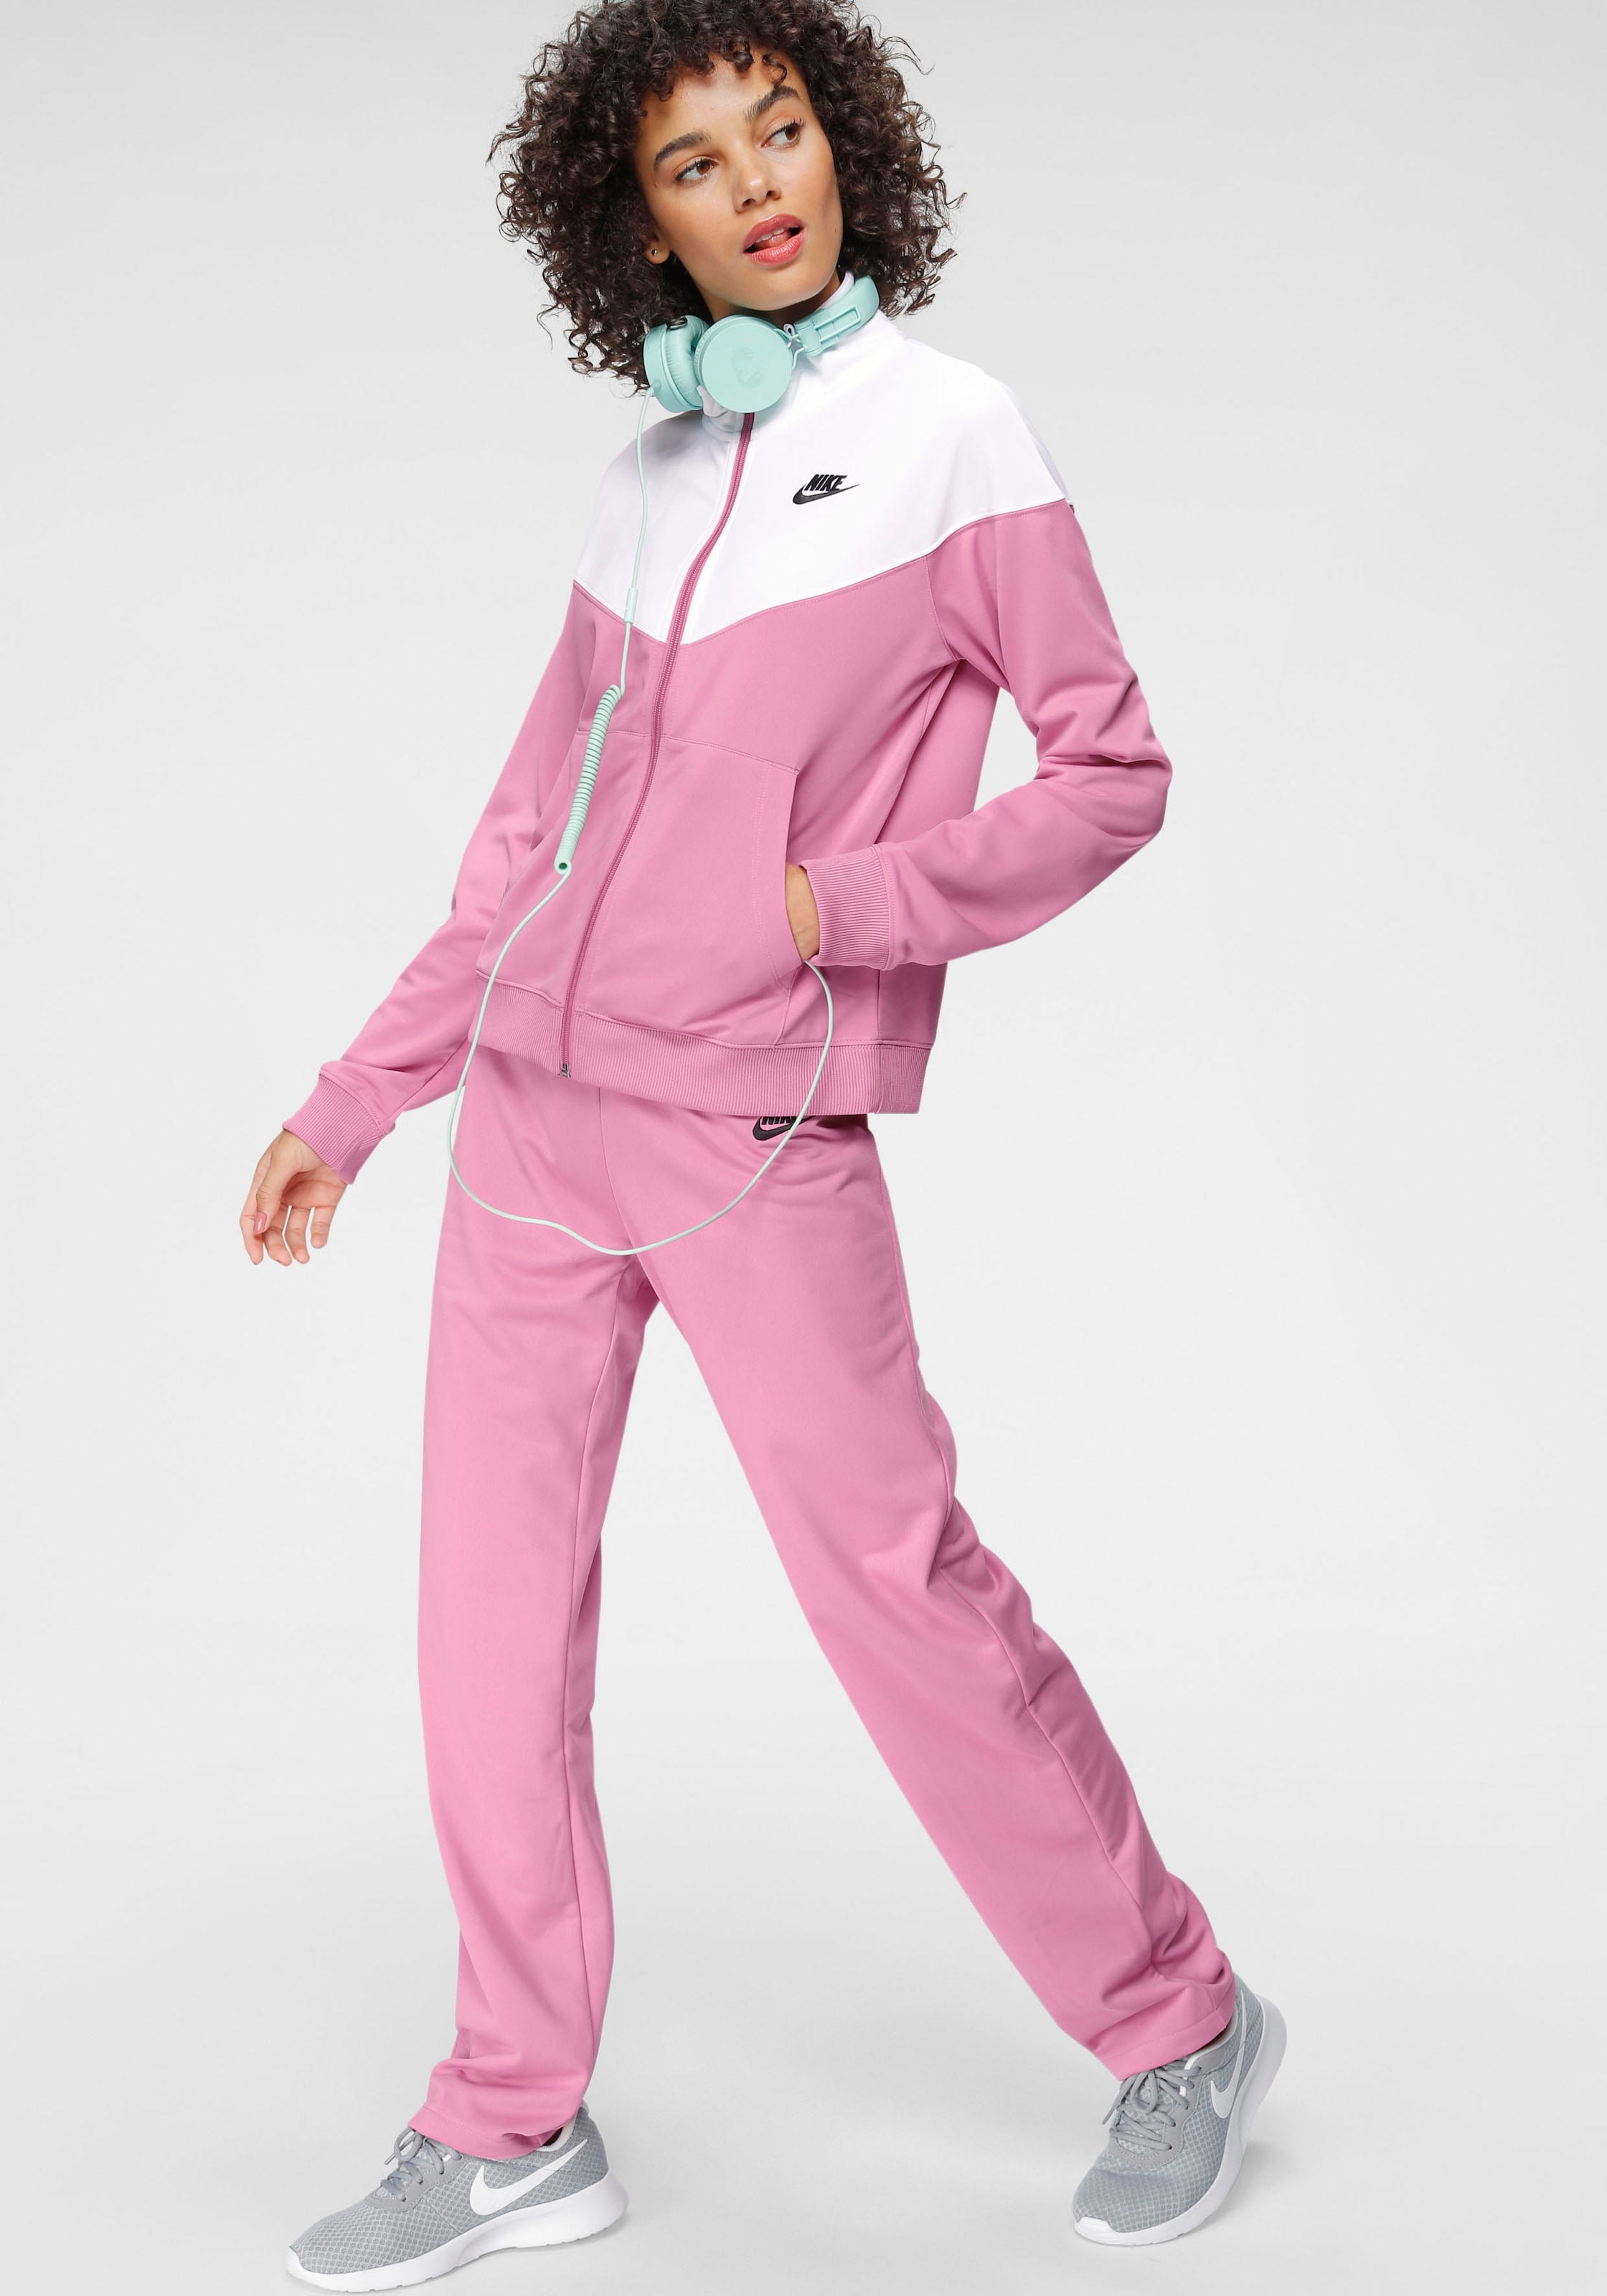 SUIT Sportswear tlg.) NSW PK«, »W Nike (Set, 2 TRK auf online | Rechnung Trainingsanzug kaufen BAUR